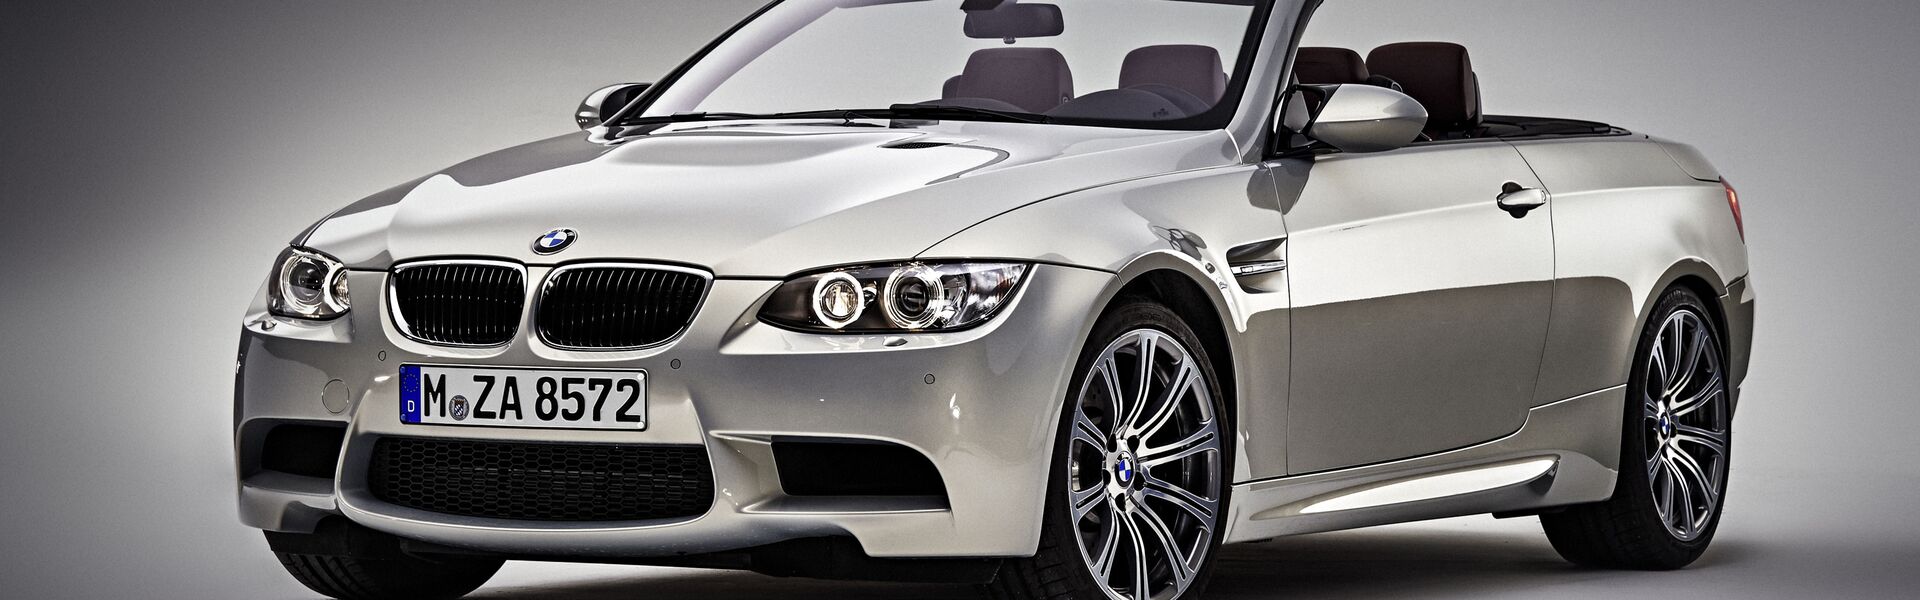 Performance díly pro automobil BMW M3 E90, E92, E93